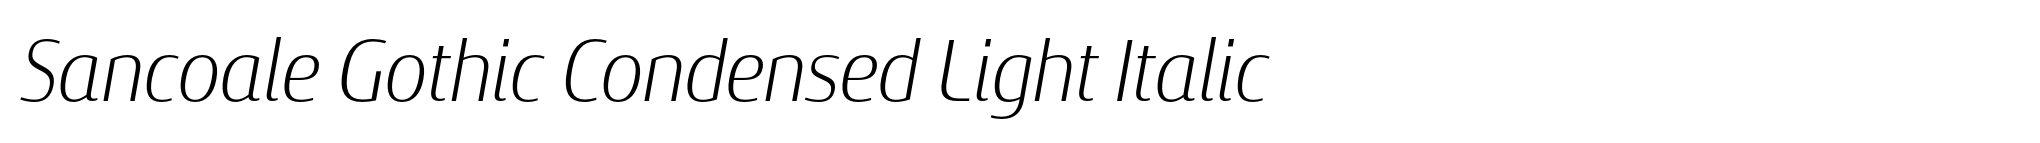 Sancoale Gothic Condensed Light Italic image